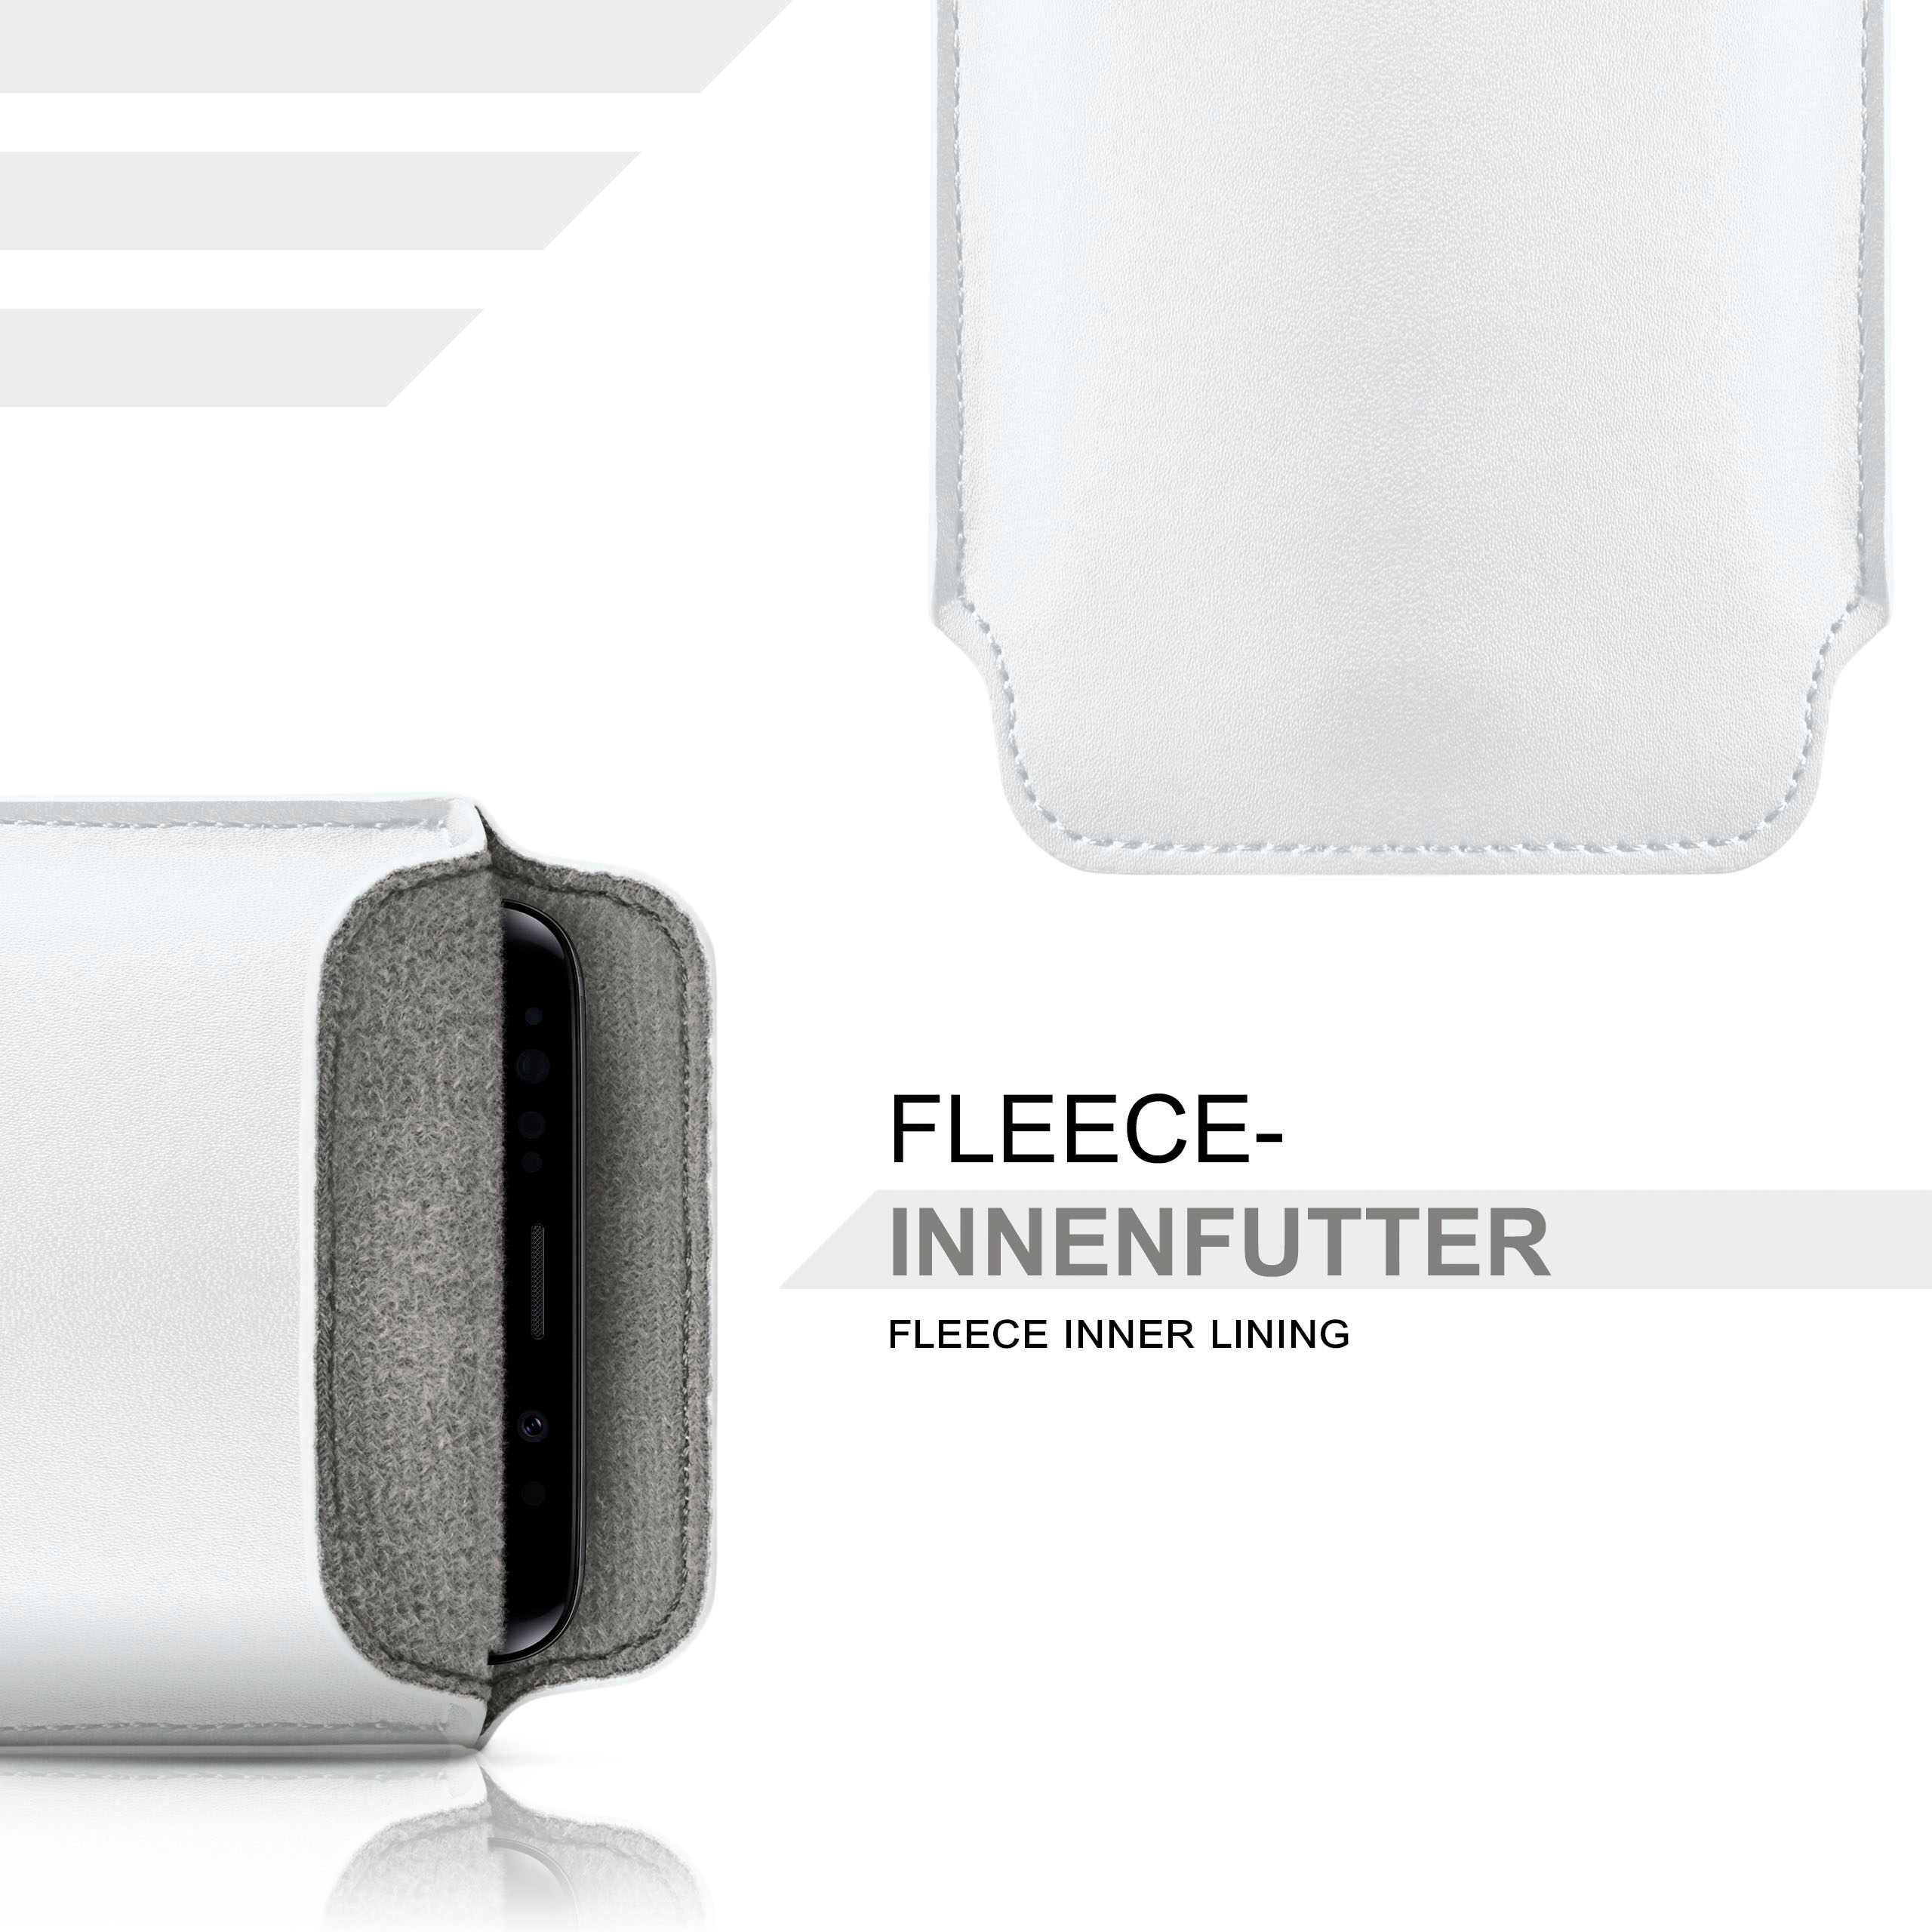 MOEX Slide Case, Full Cover, Shiny-White Mach, LG, X